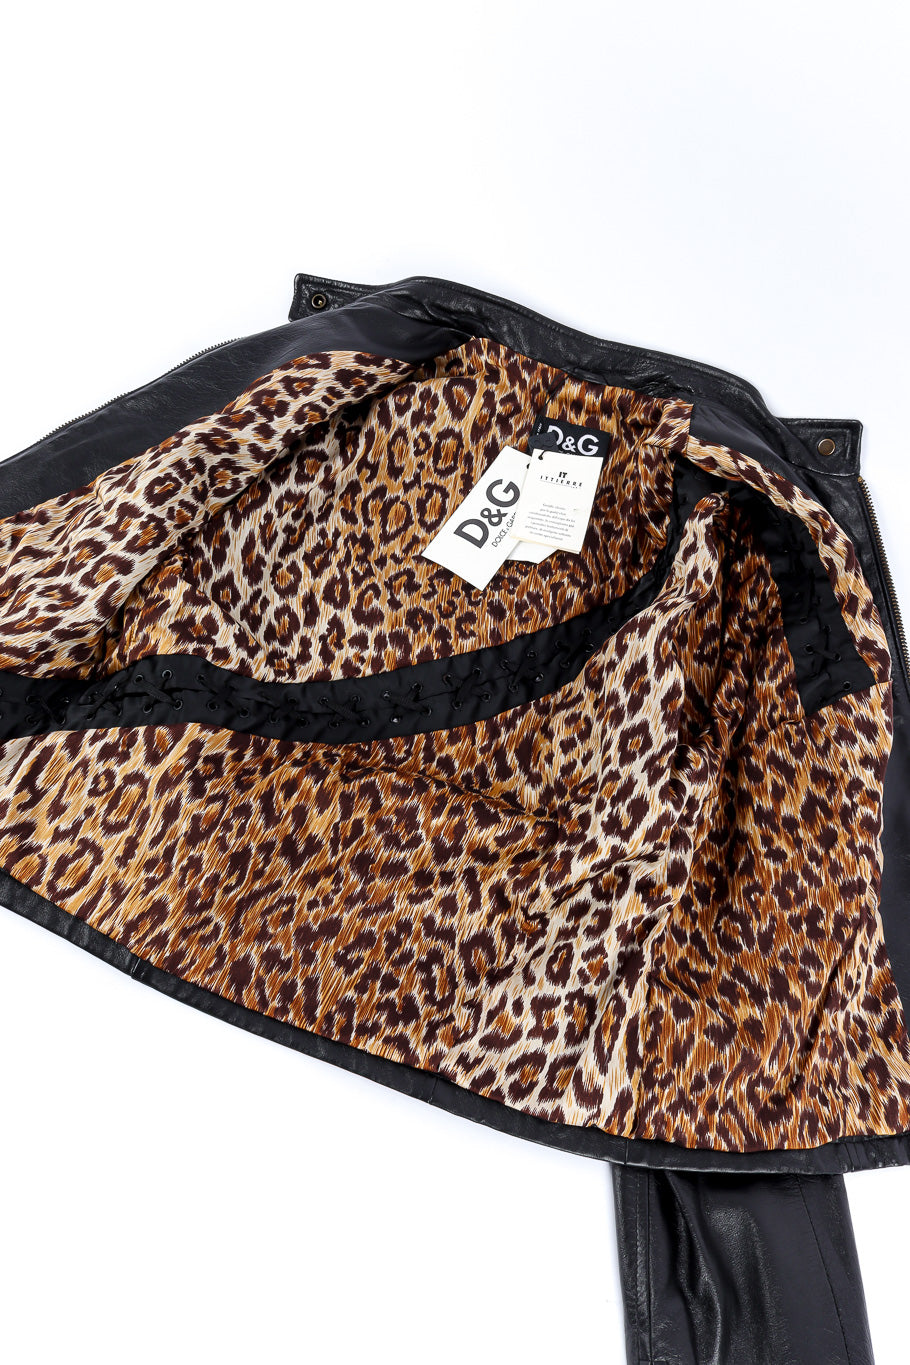 Dolce & Gabbana leather panther jacket lining detail @recessla